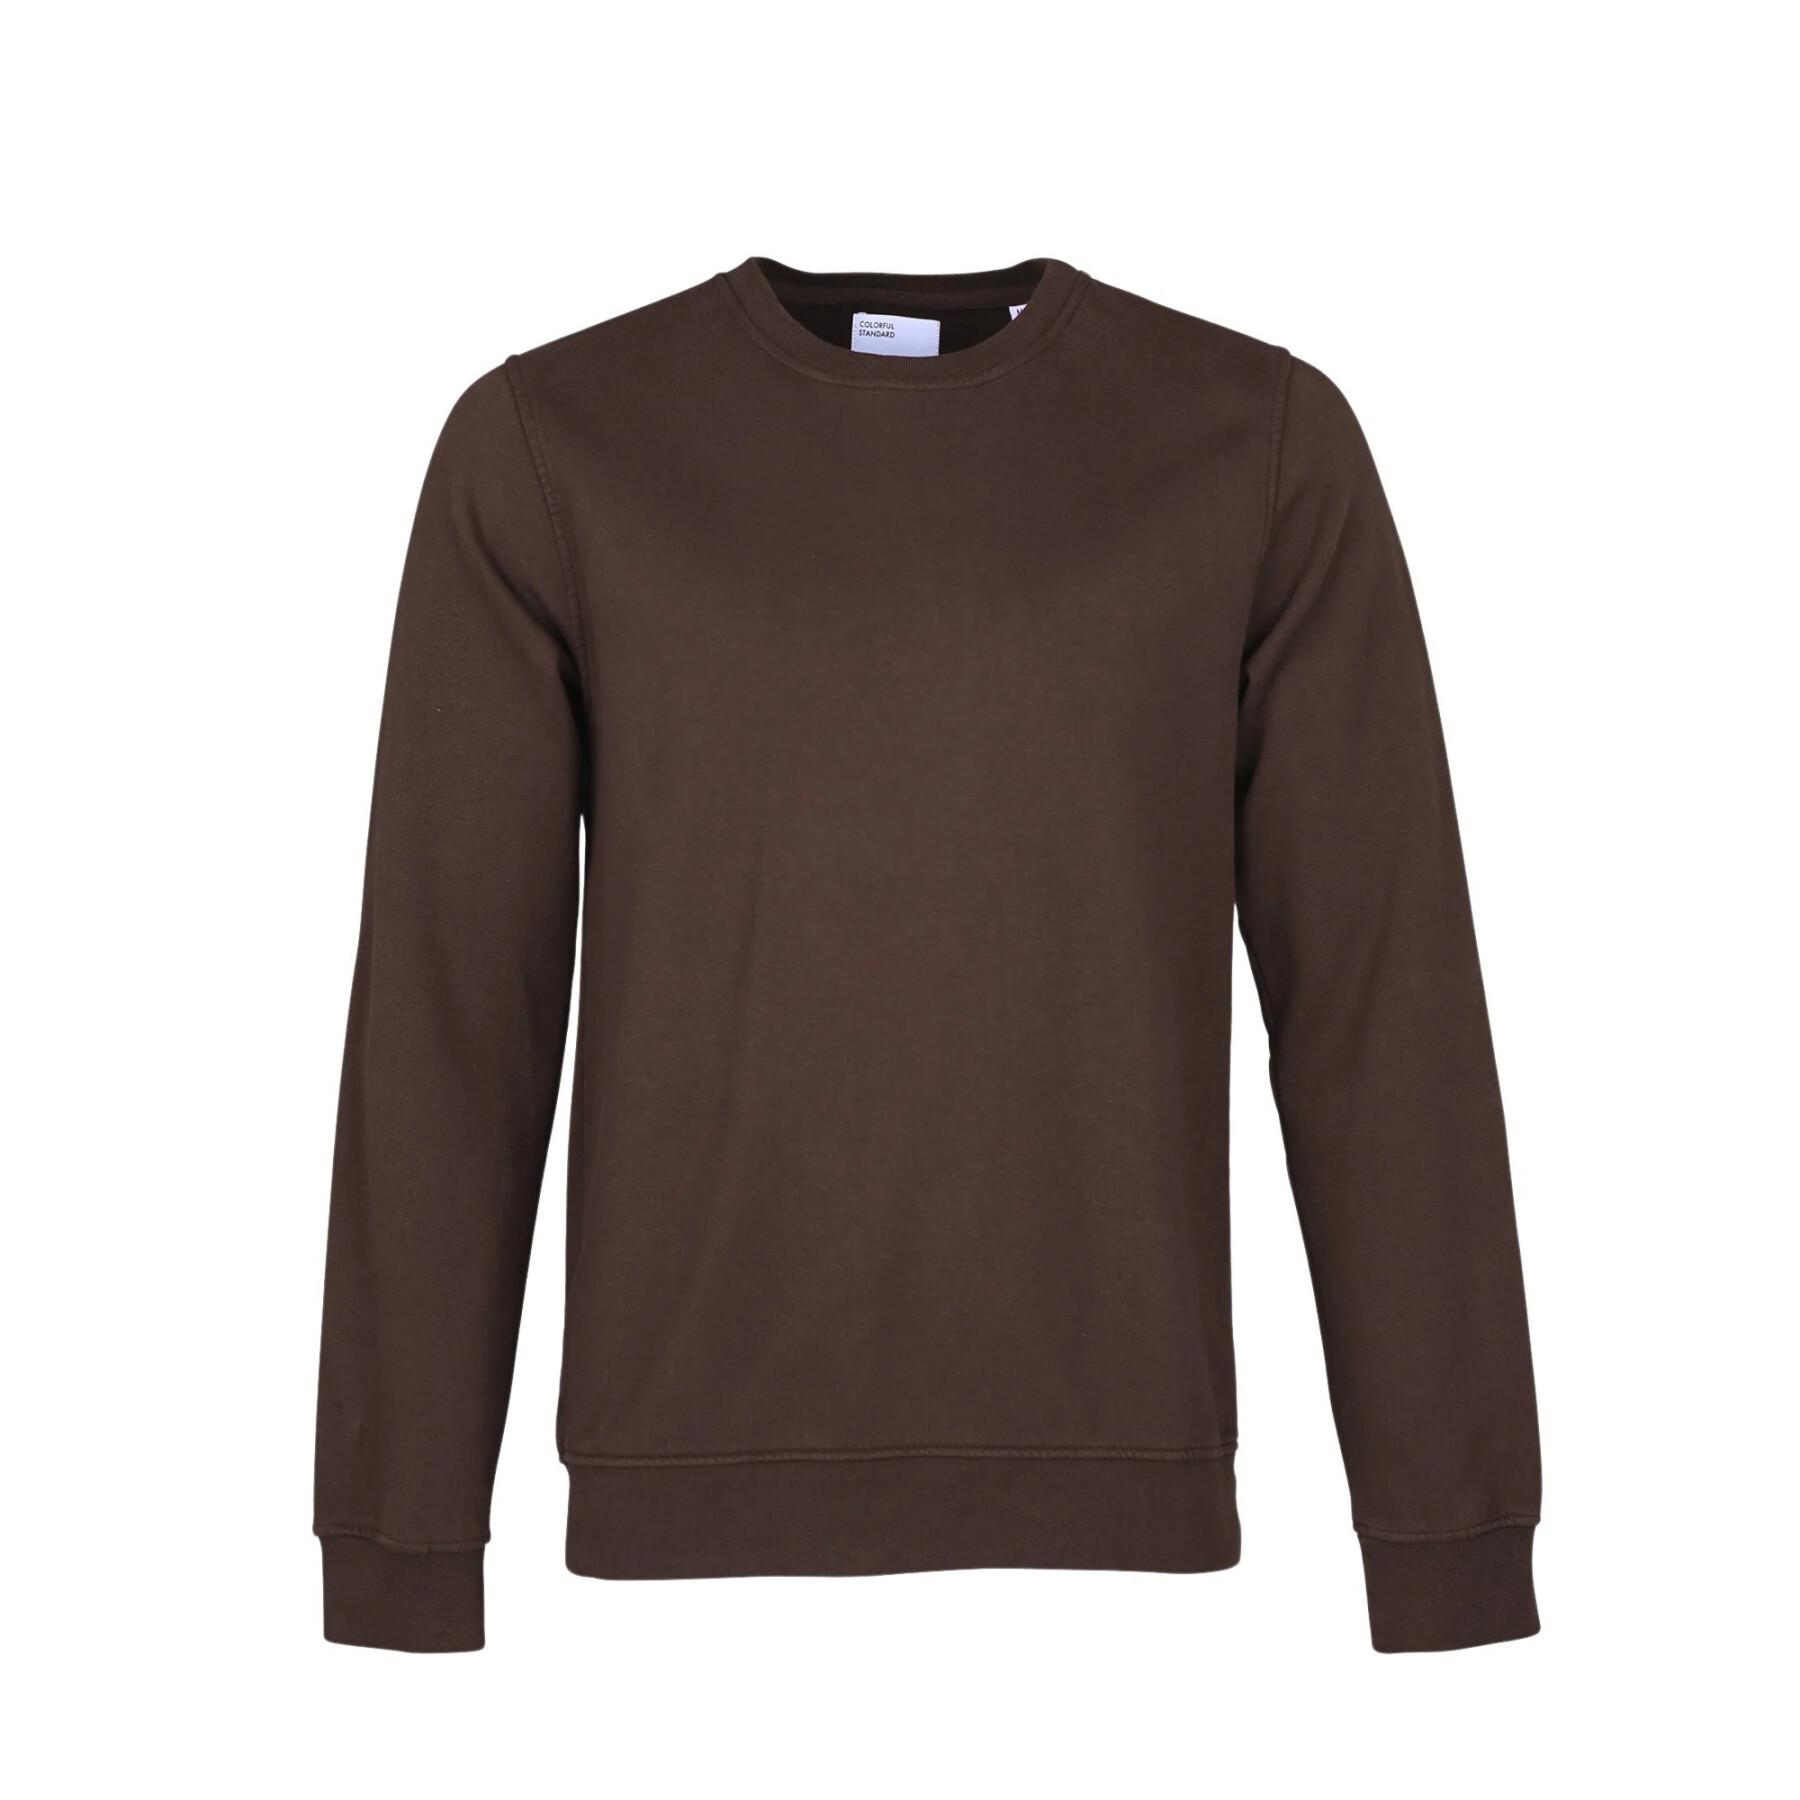 Sweatshirt med rund halsringning Colorful Standard Classic Organic coffee brown